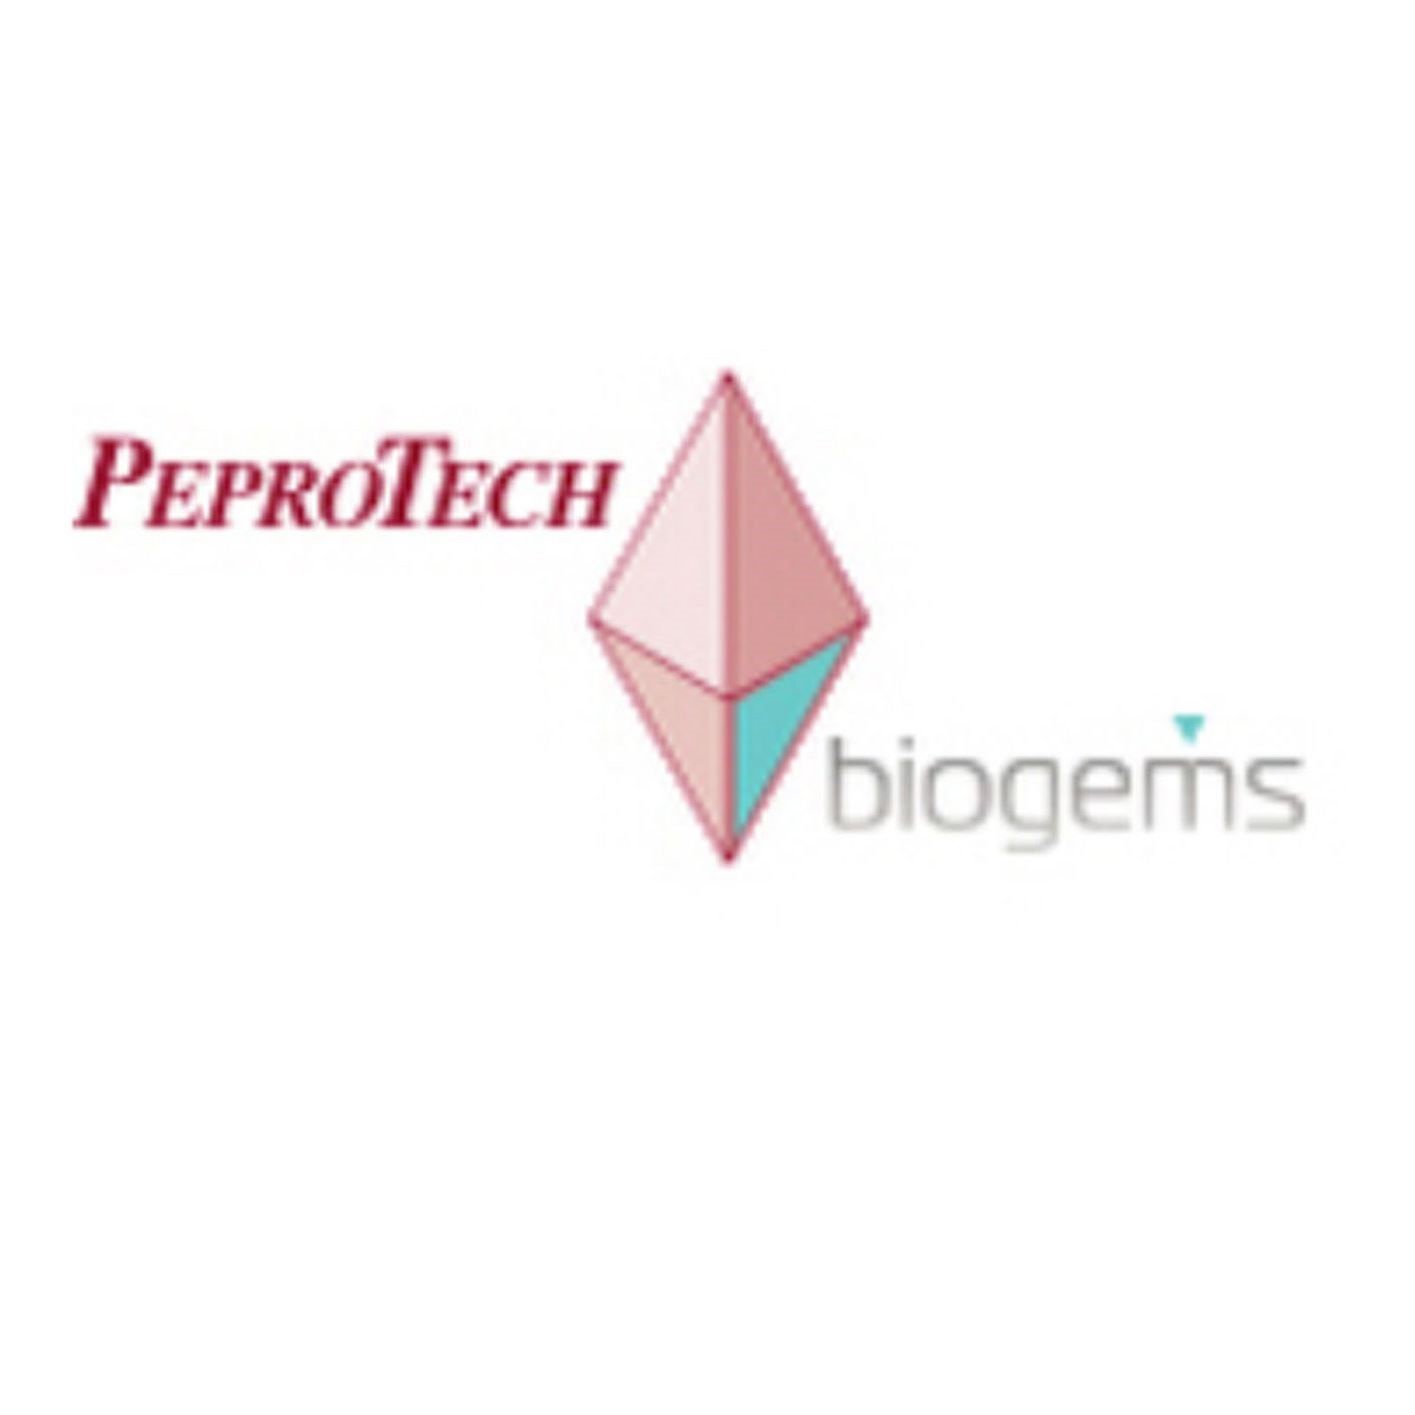 Peprotech(Biogems) 5563993-25mg CHIR 98014